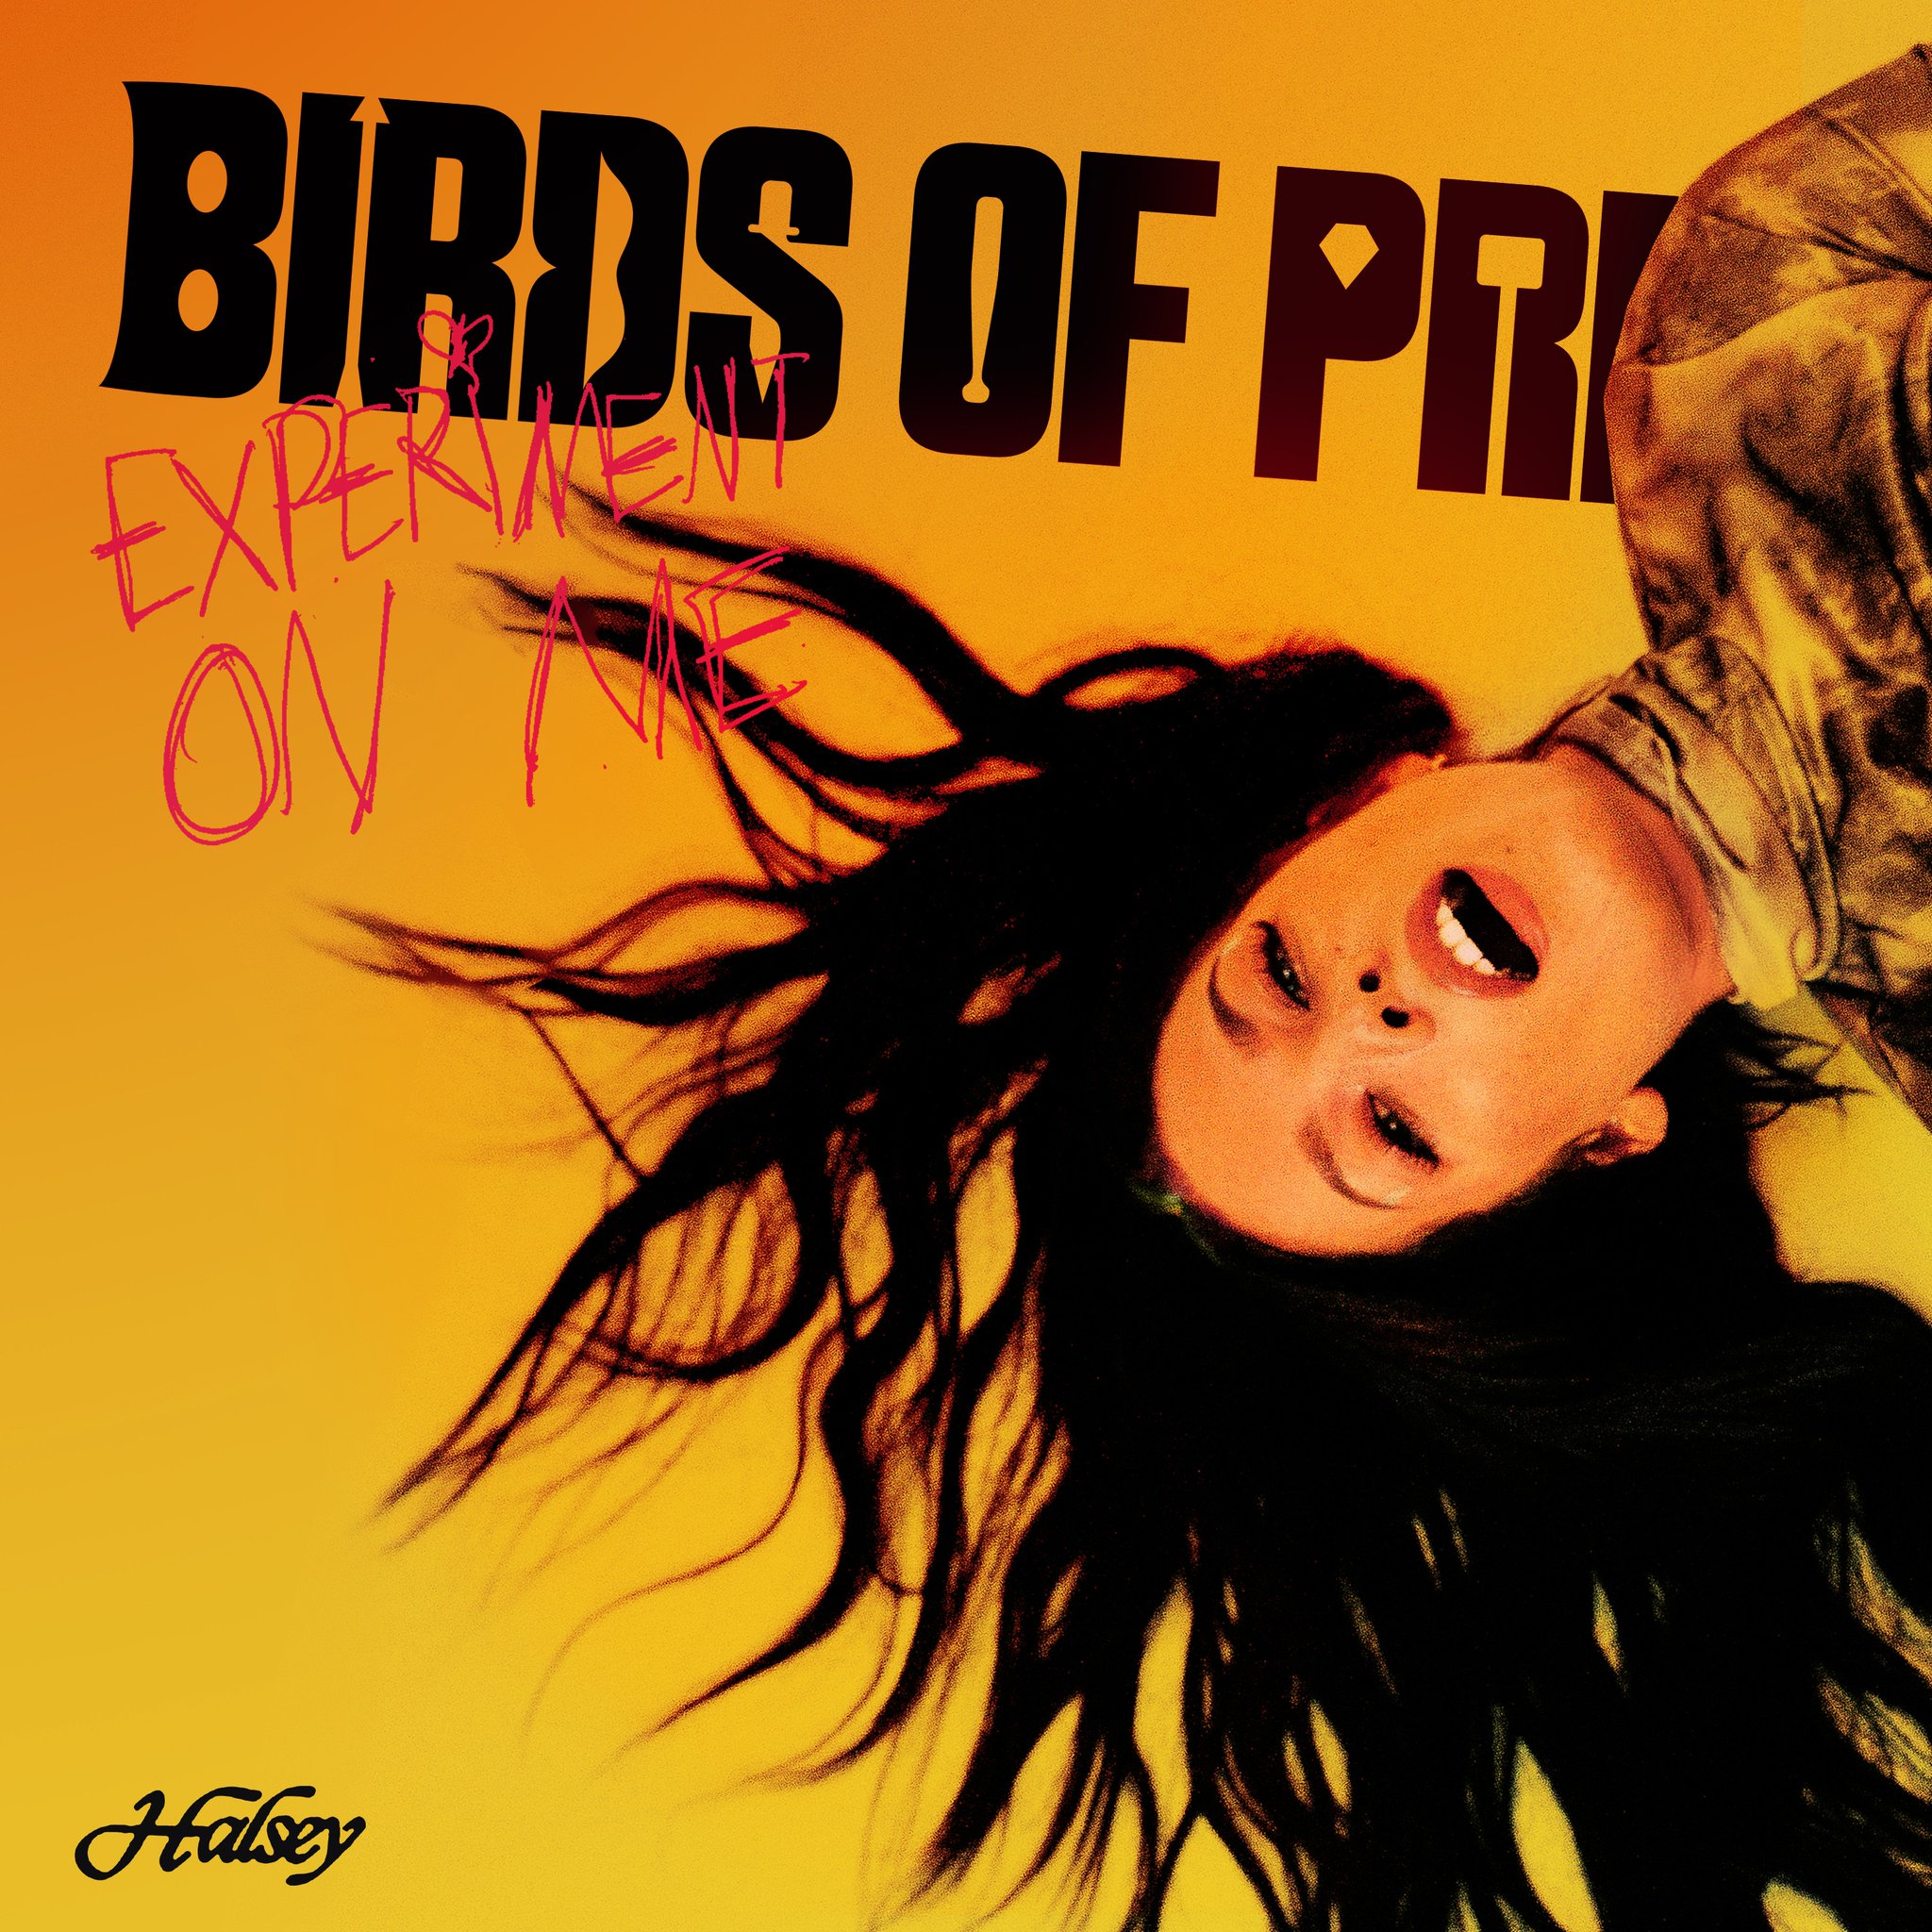 Birds of Prey (soundtrack) - Wikipedia